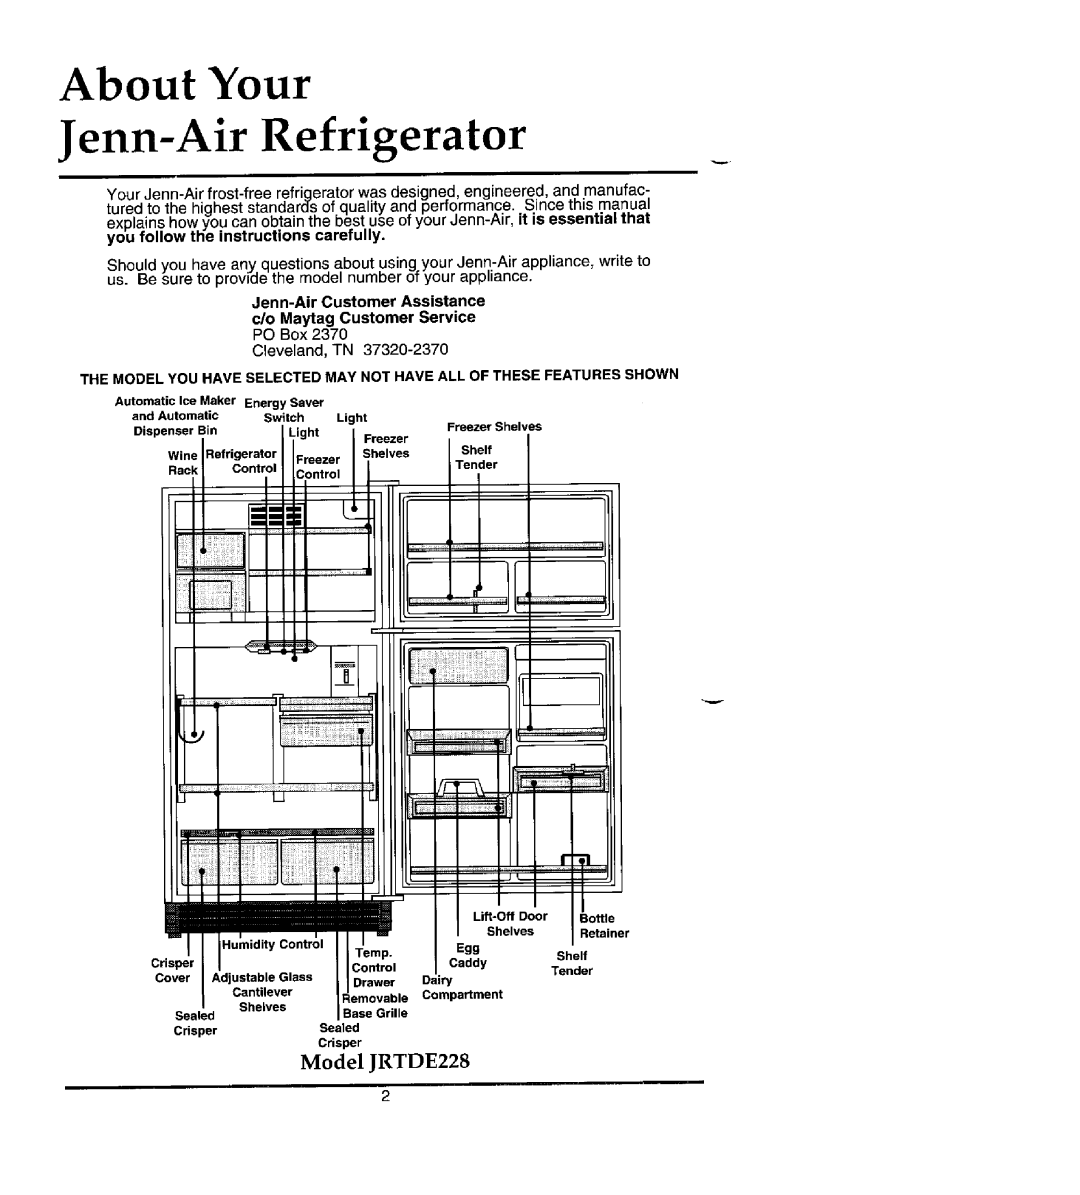 Jenn-Air manual About Your Jenn-AirRefrigerator, Model JRTDE228 